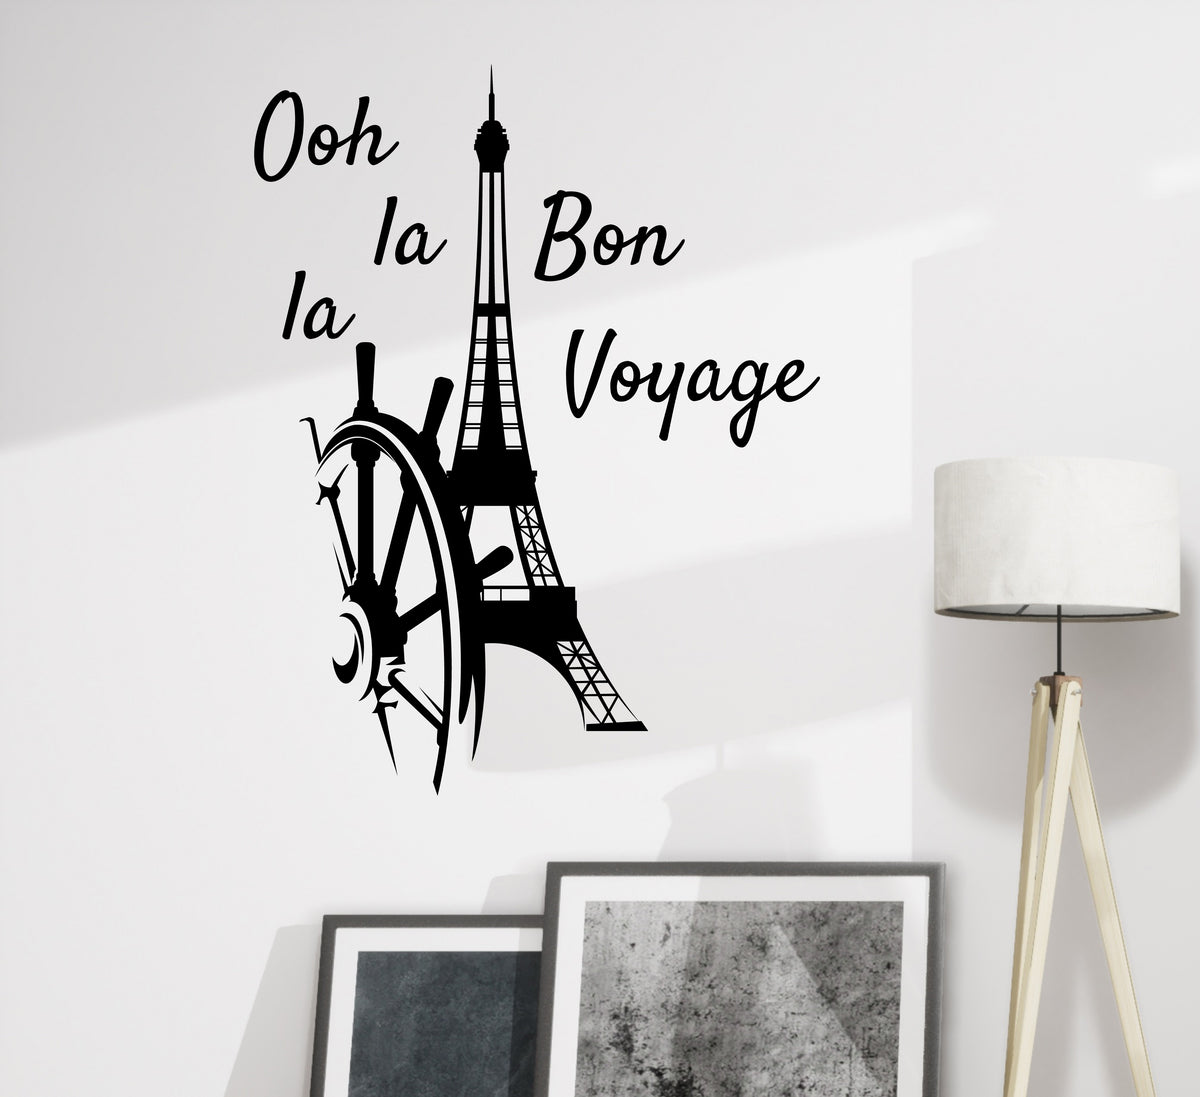 Bon voyage - Wall stickers